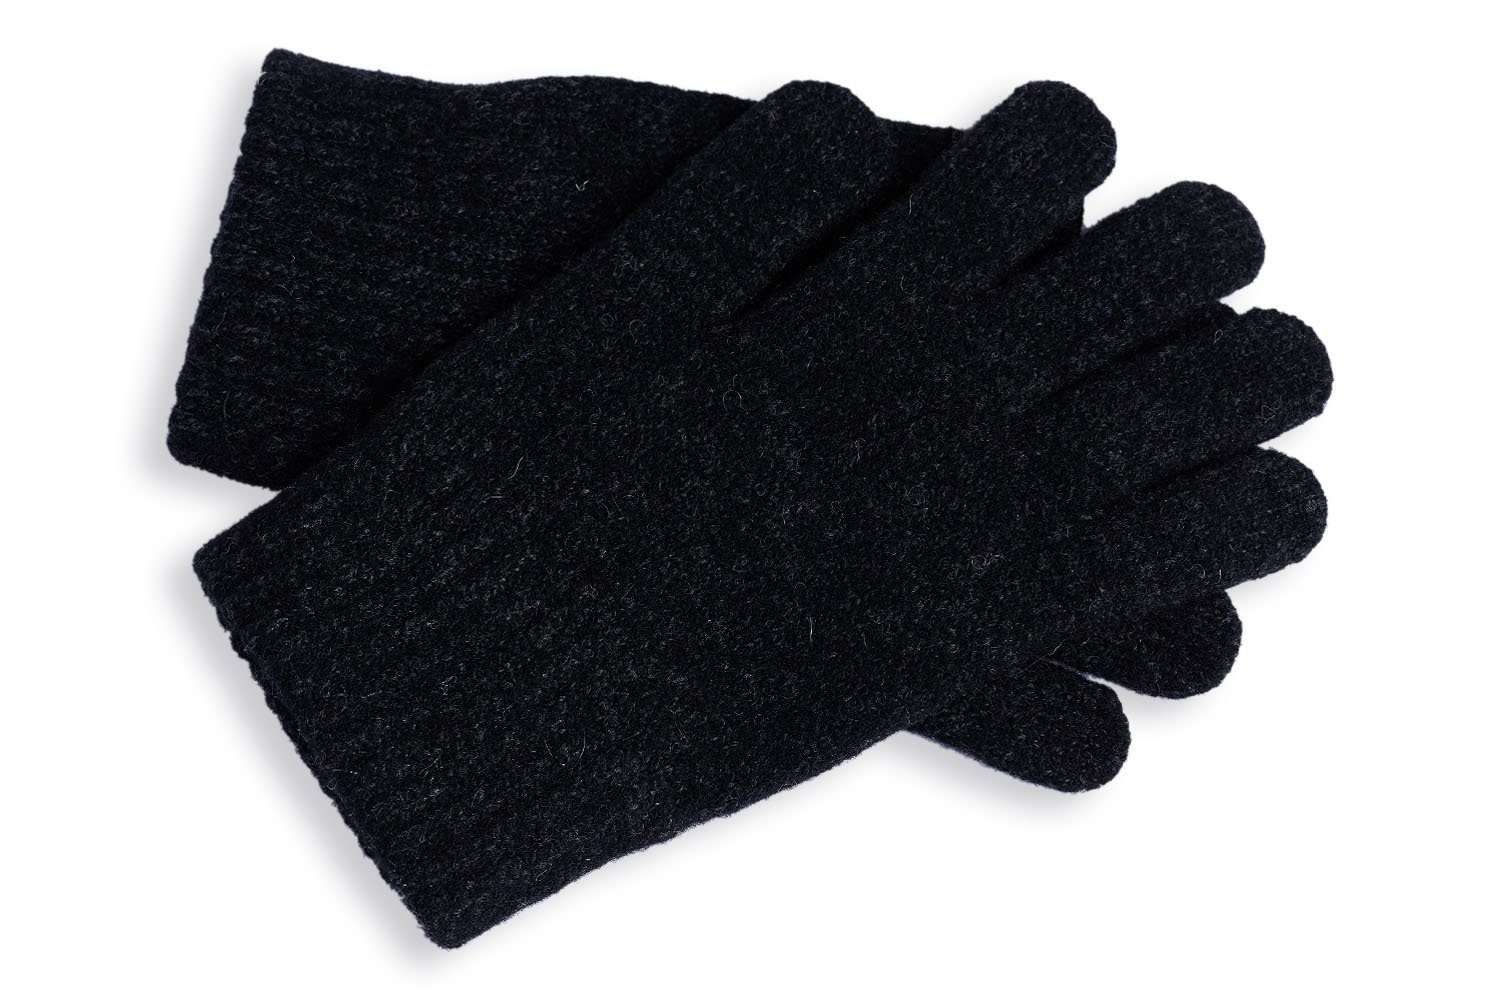 Kamea Strickhandschuhe Damen Handschuhe passend zu unserem Anna und Kansas Winterset Schwarz